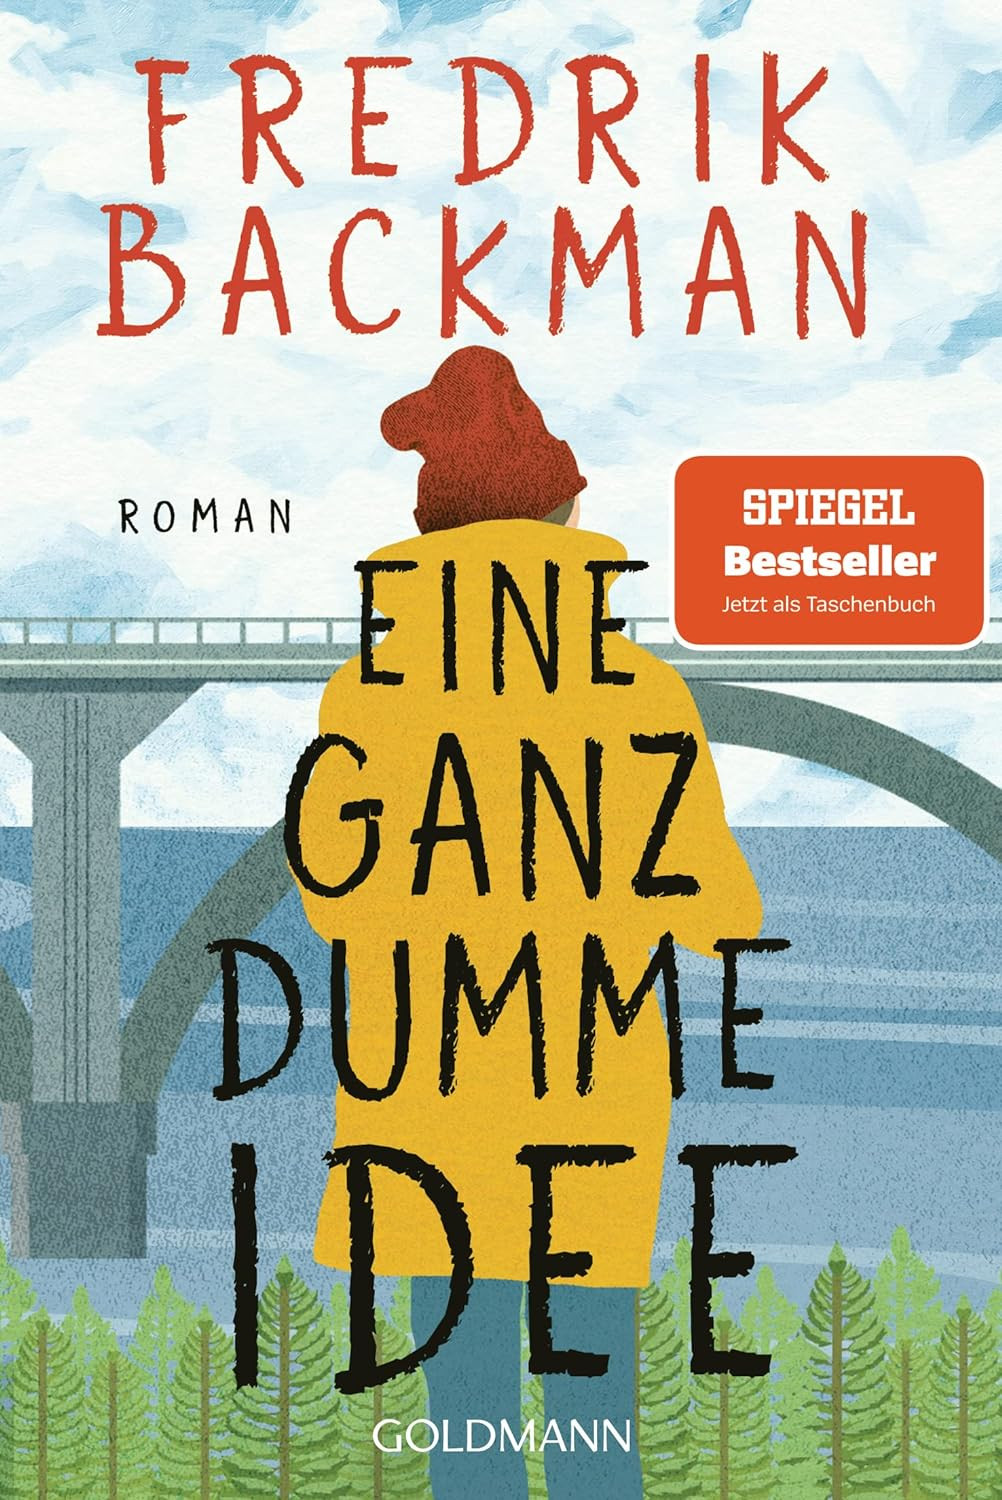 Publisher Goldmann - Eine Ganz Dumme Idee -  Backman Fredrik